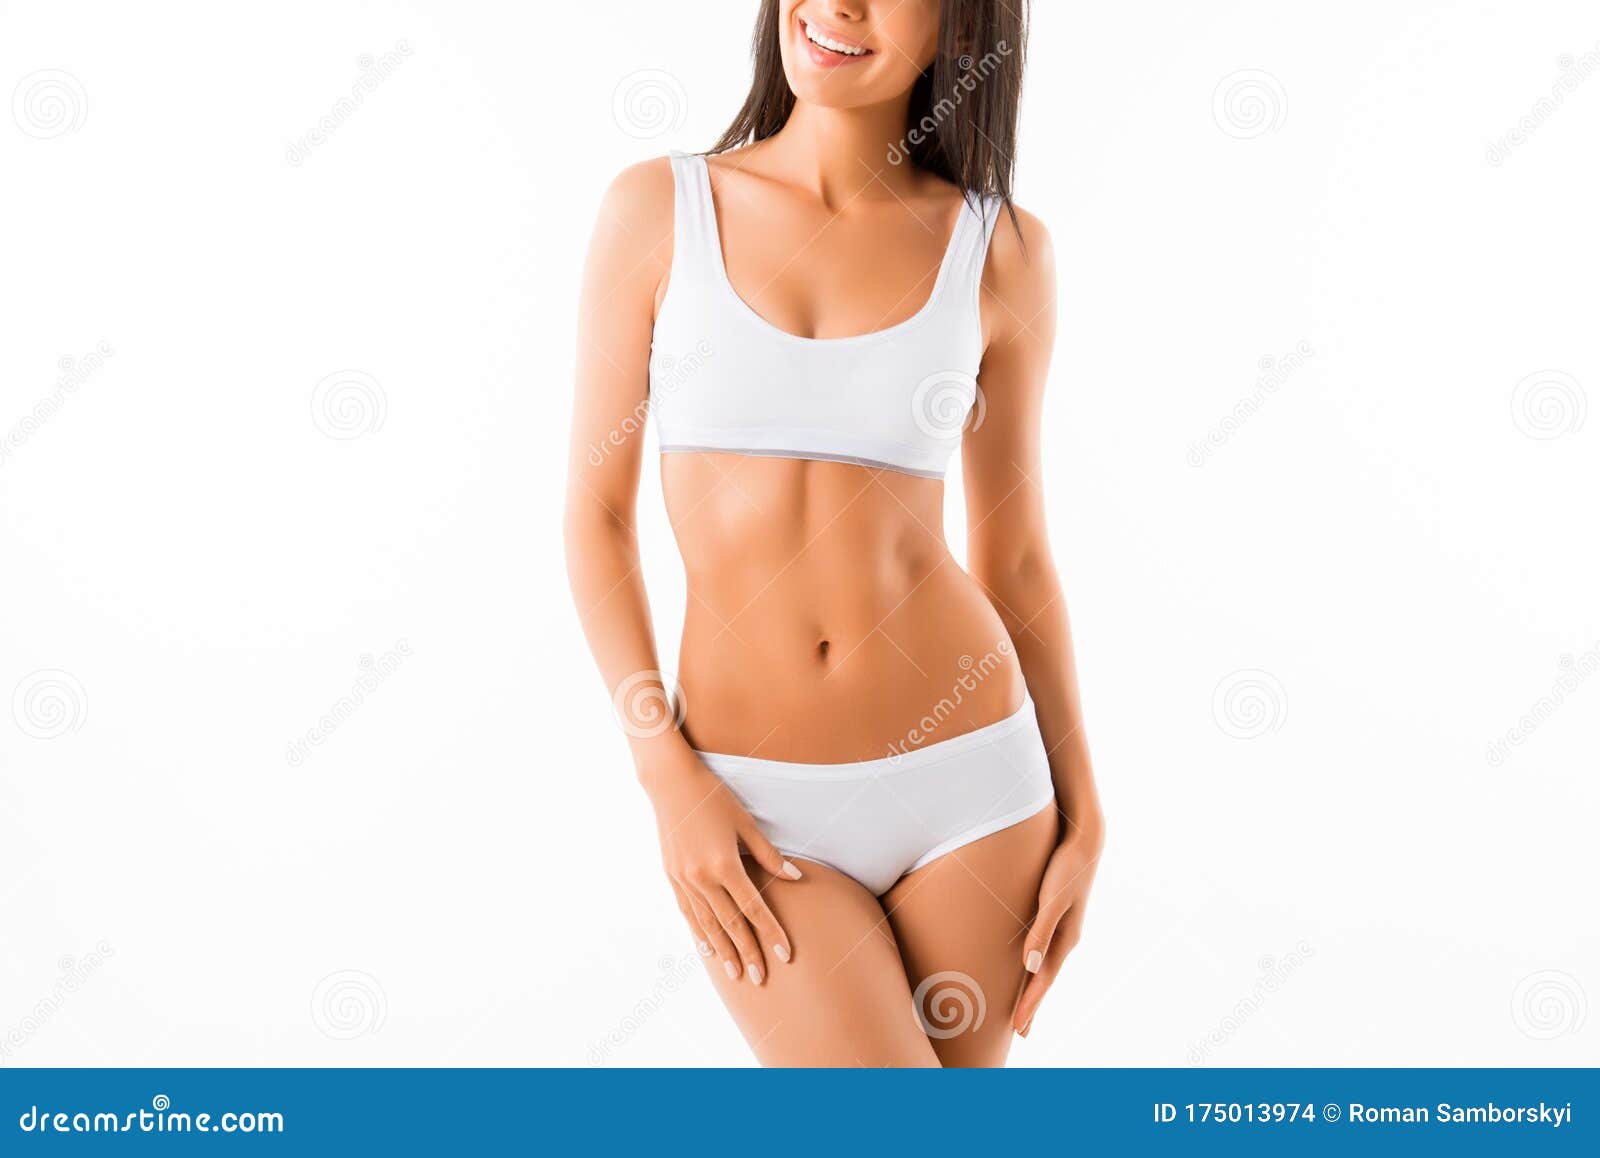 White lingerie lady sex photo set